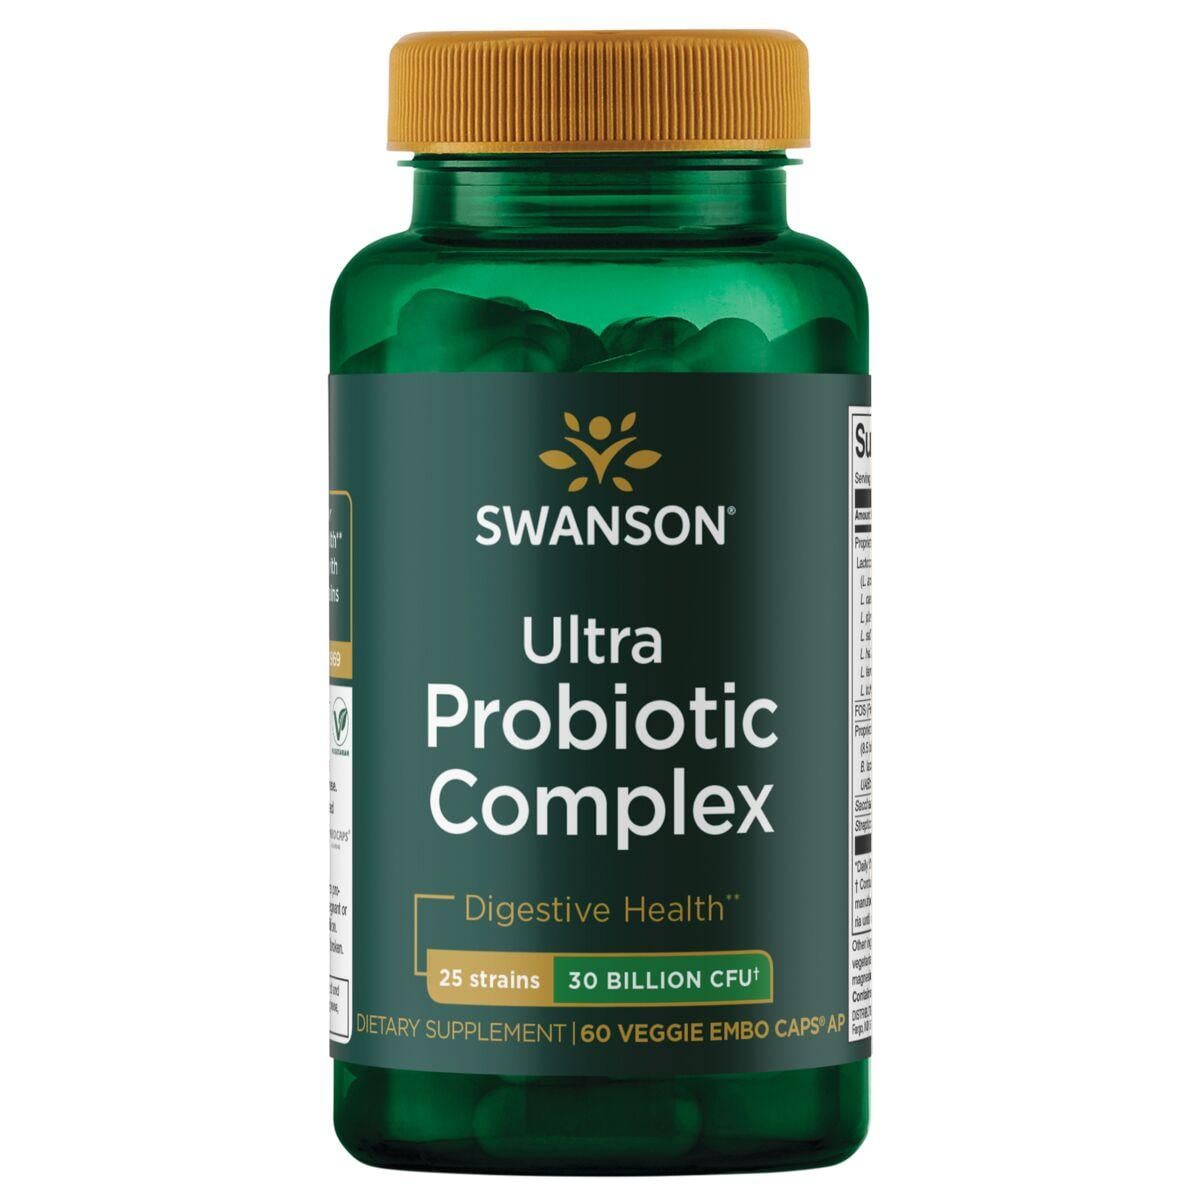 Swanson Probiotics Ultra Probiotic Complex Supplement Vitamin | 30 Billion CFU | 60 Veg Caps